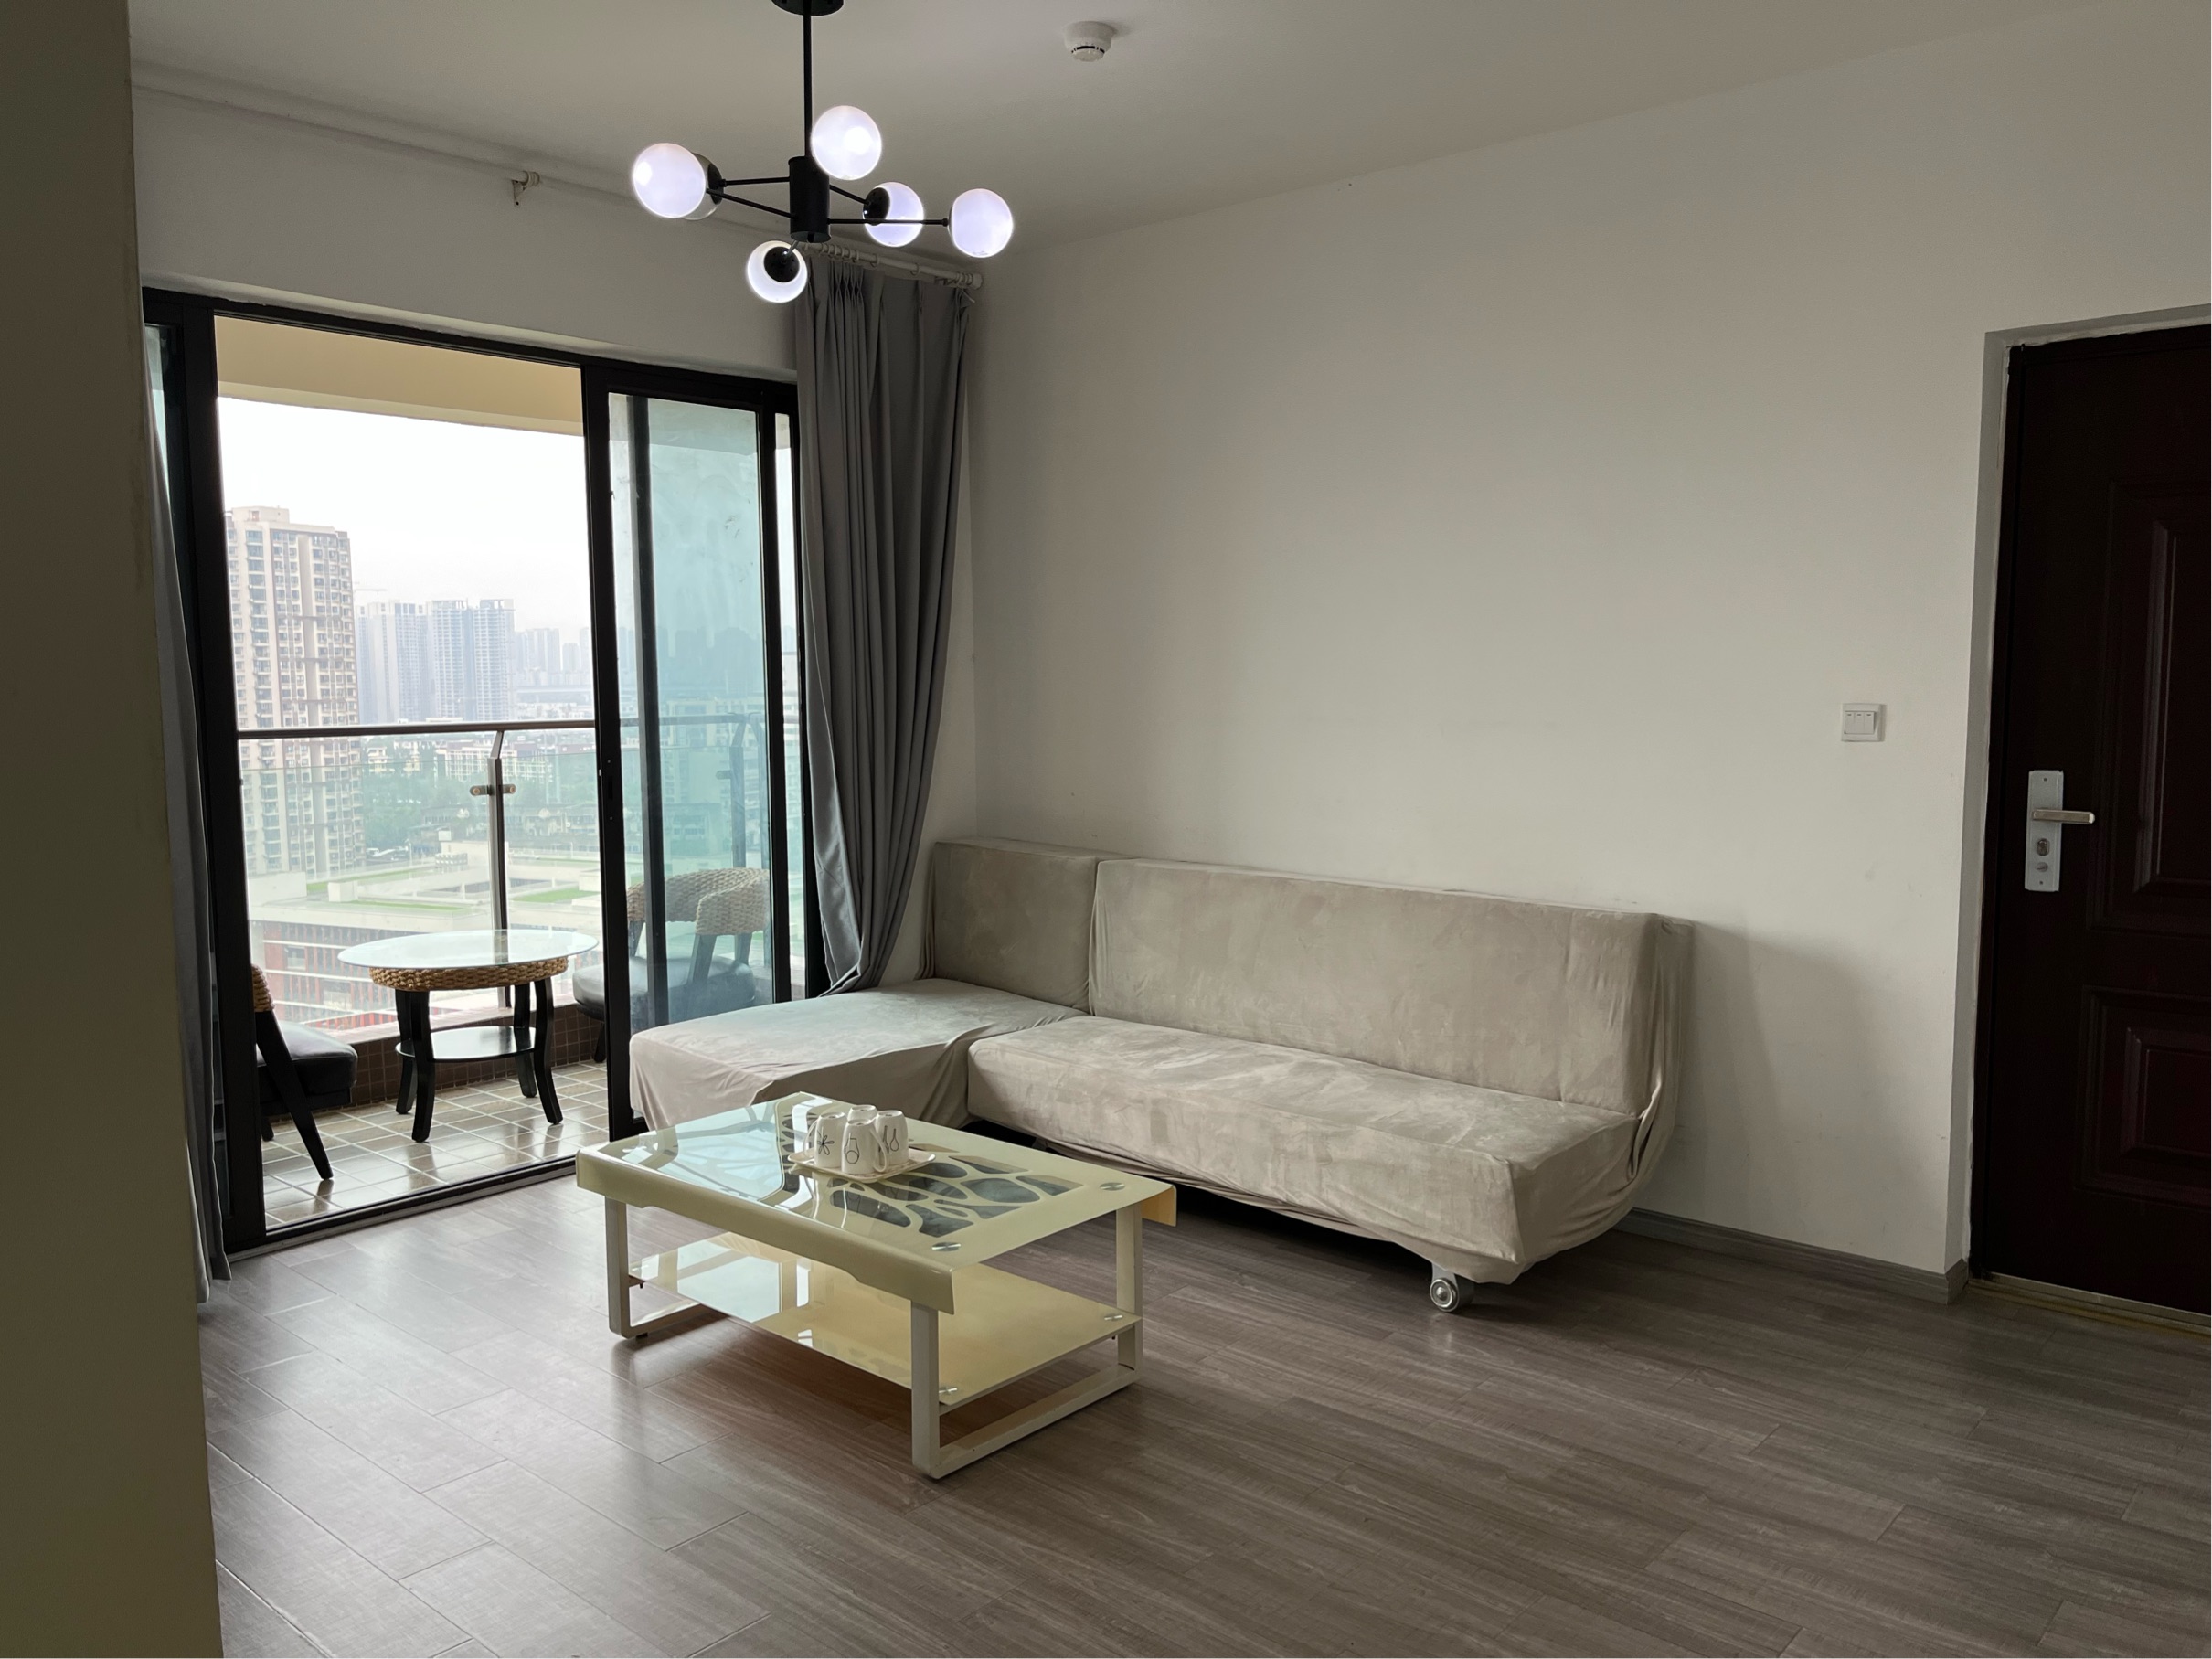 Chengdu-JinJiang-Cozy Home,Clean&Comfy,No Gender Limit,Hustle & Bustle